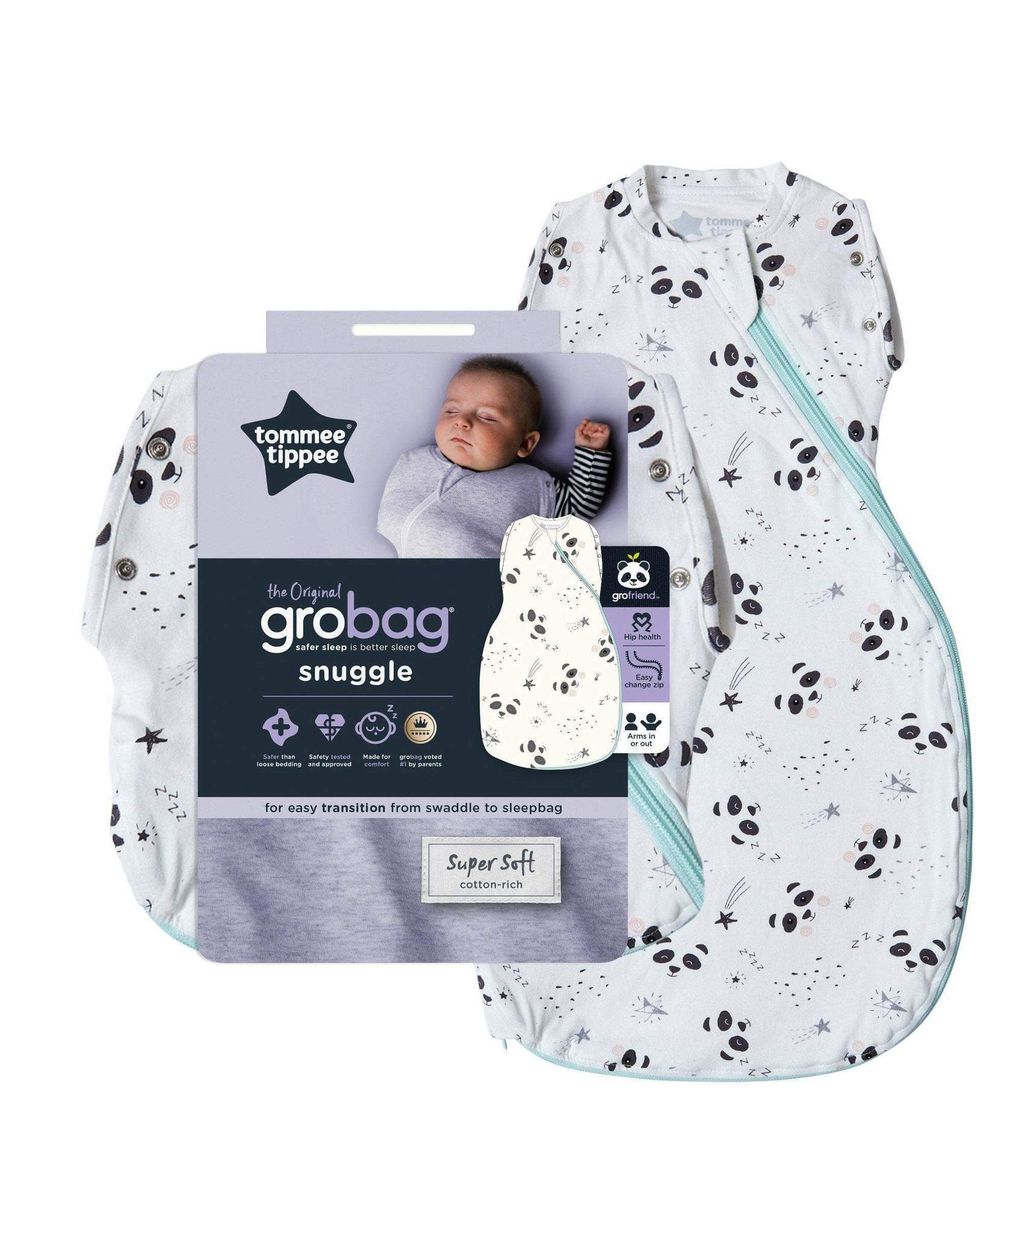 gro-dreampod-sleep-bags-swaddling-tommee-tippee-the-original-grobag-newborn-snuggle-baby-sleep-bag-white-29490434310309_1024x1024@2x.jpg